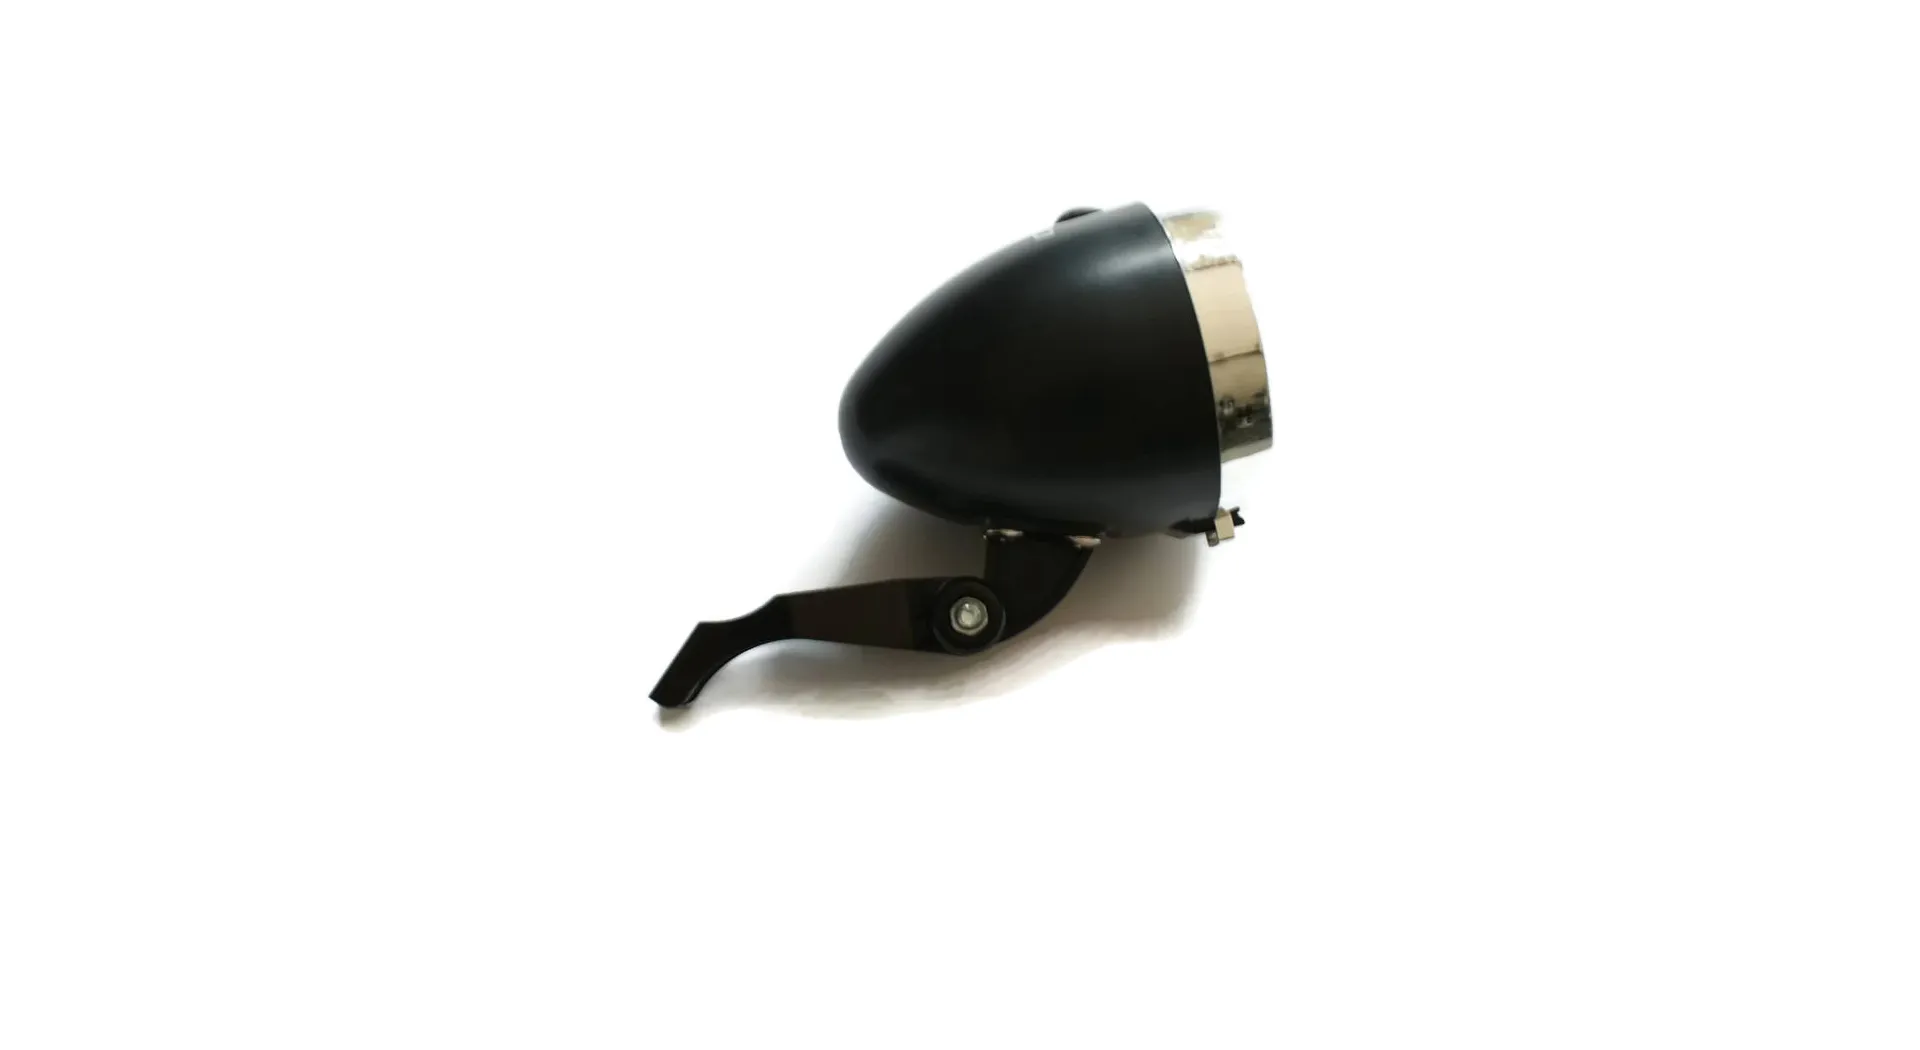 Lampa rowerowa Nexelo przód 3 LED retro na baterie, czarna